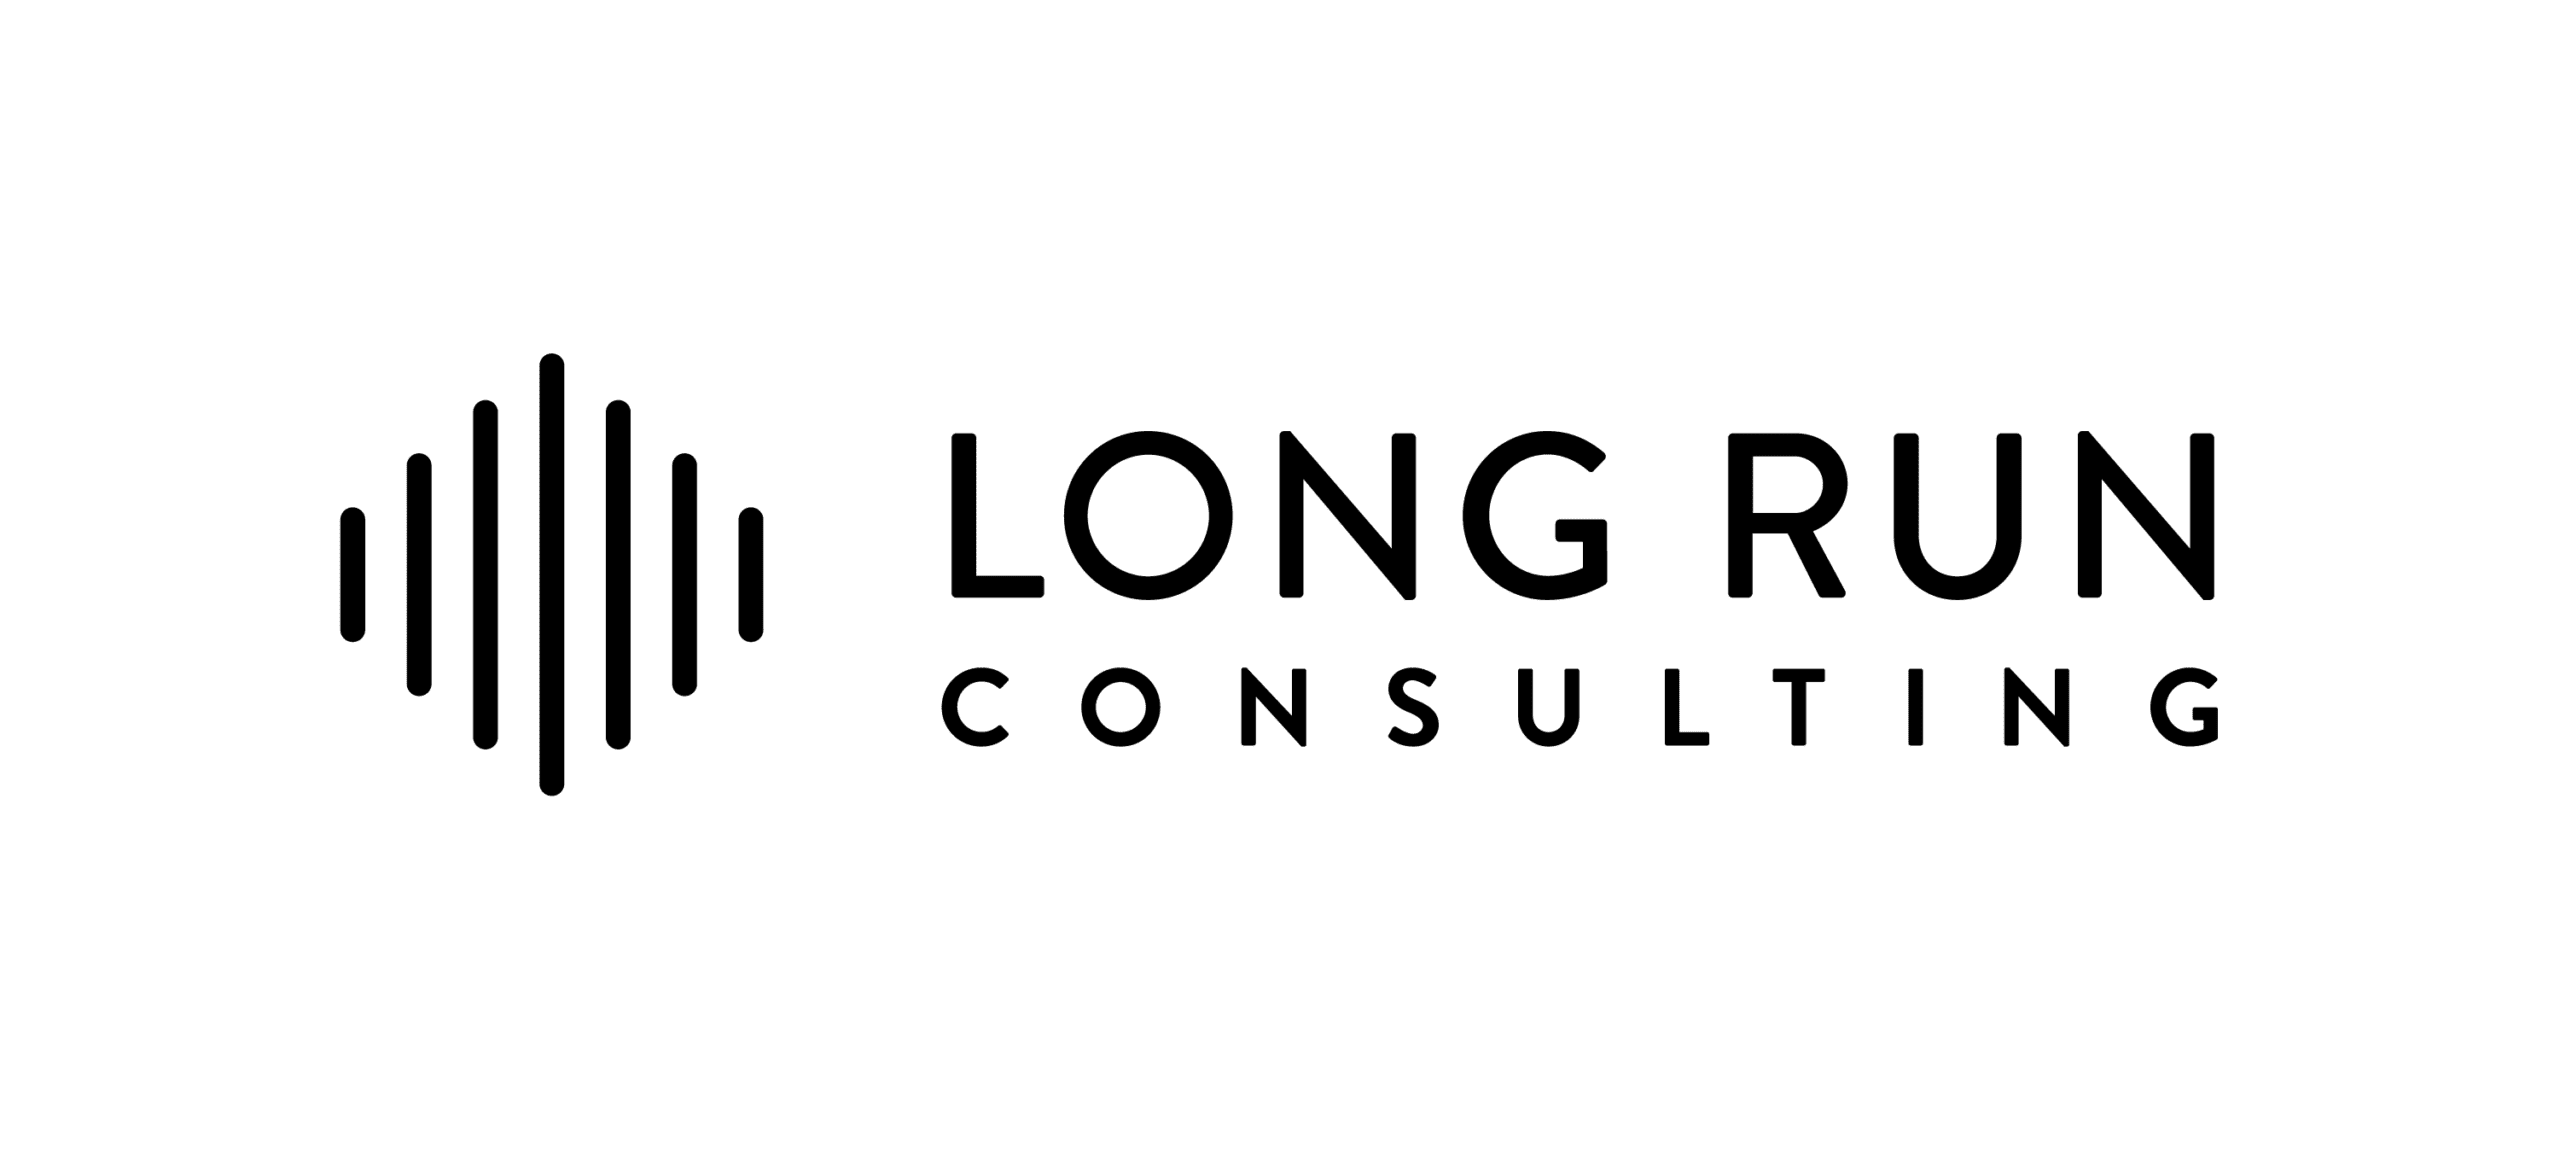 long run consulting logo